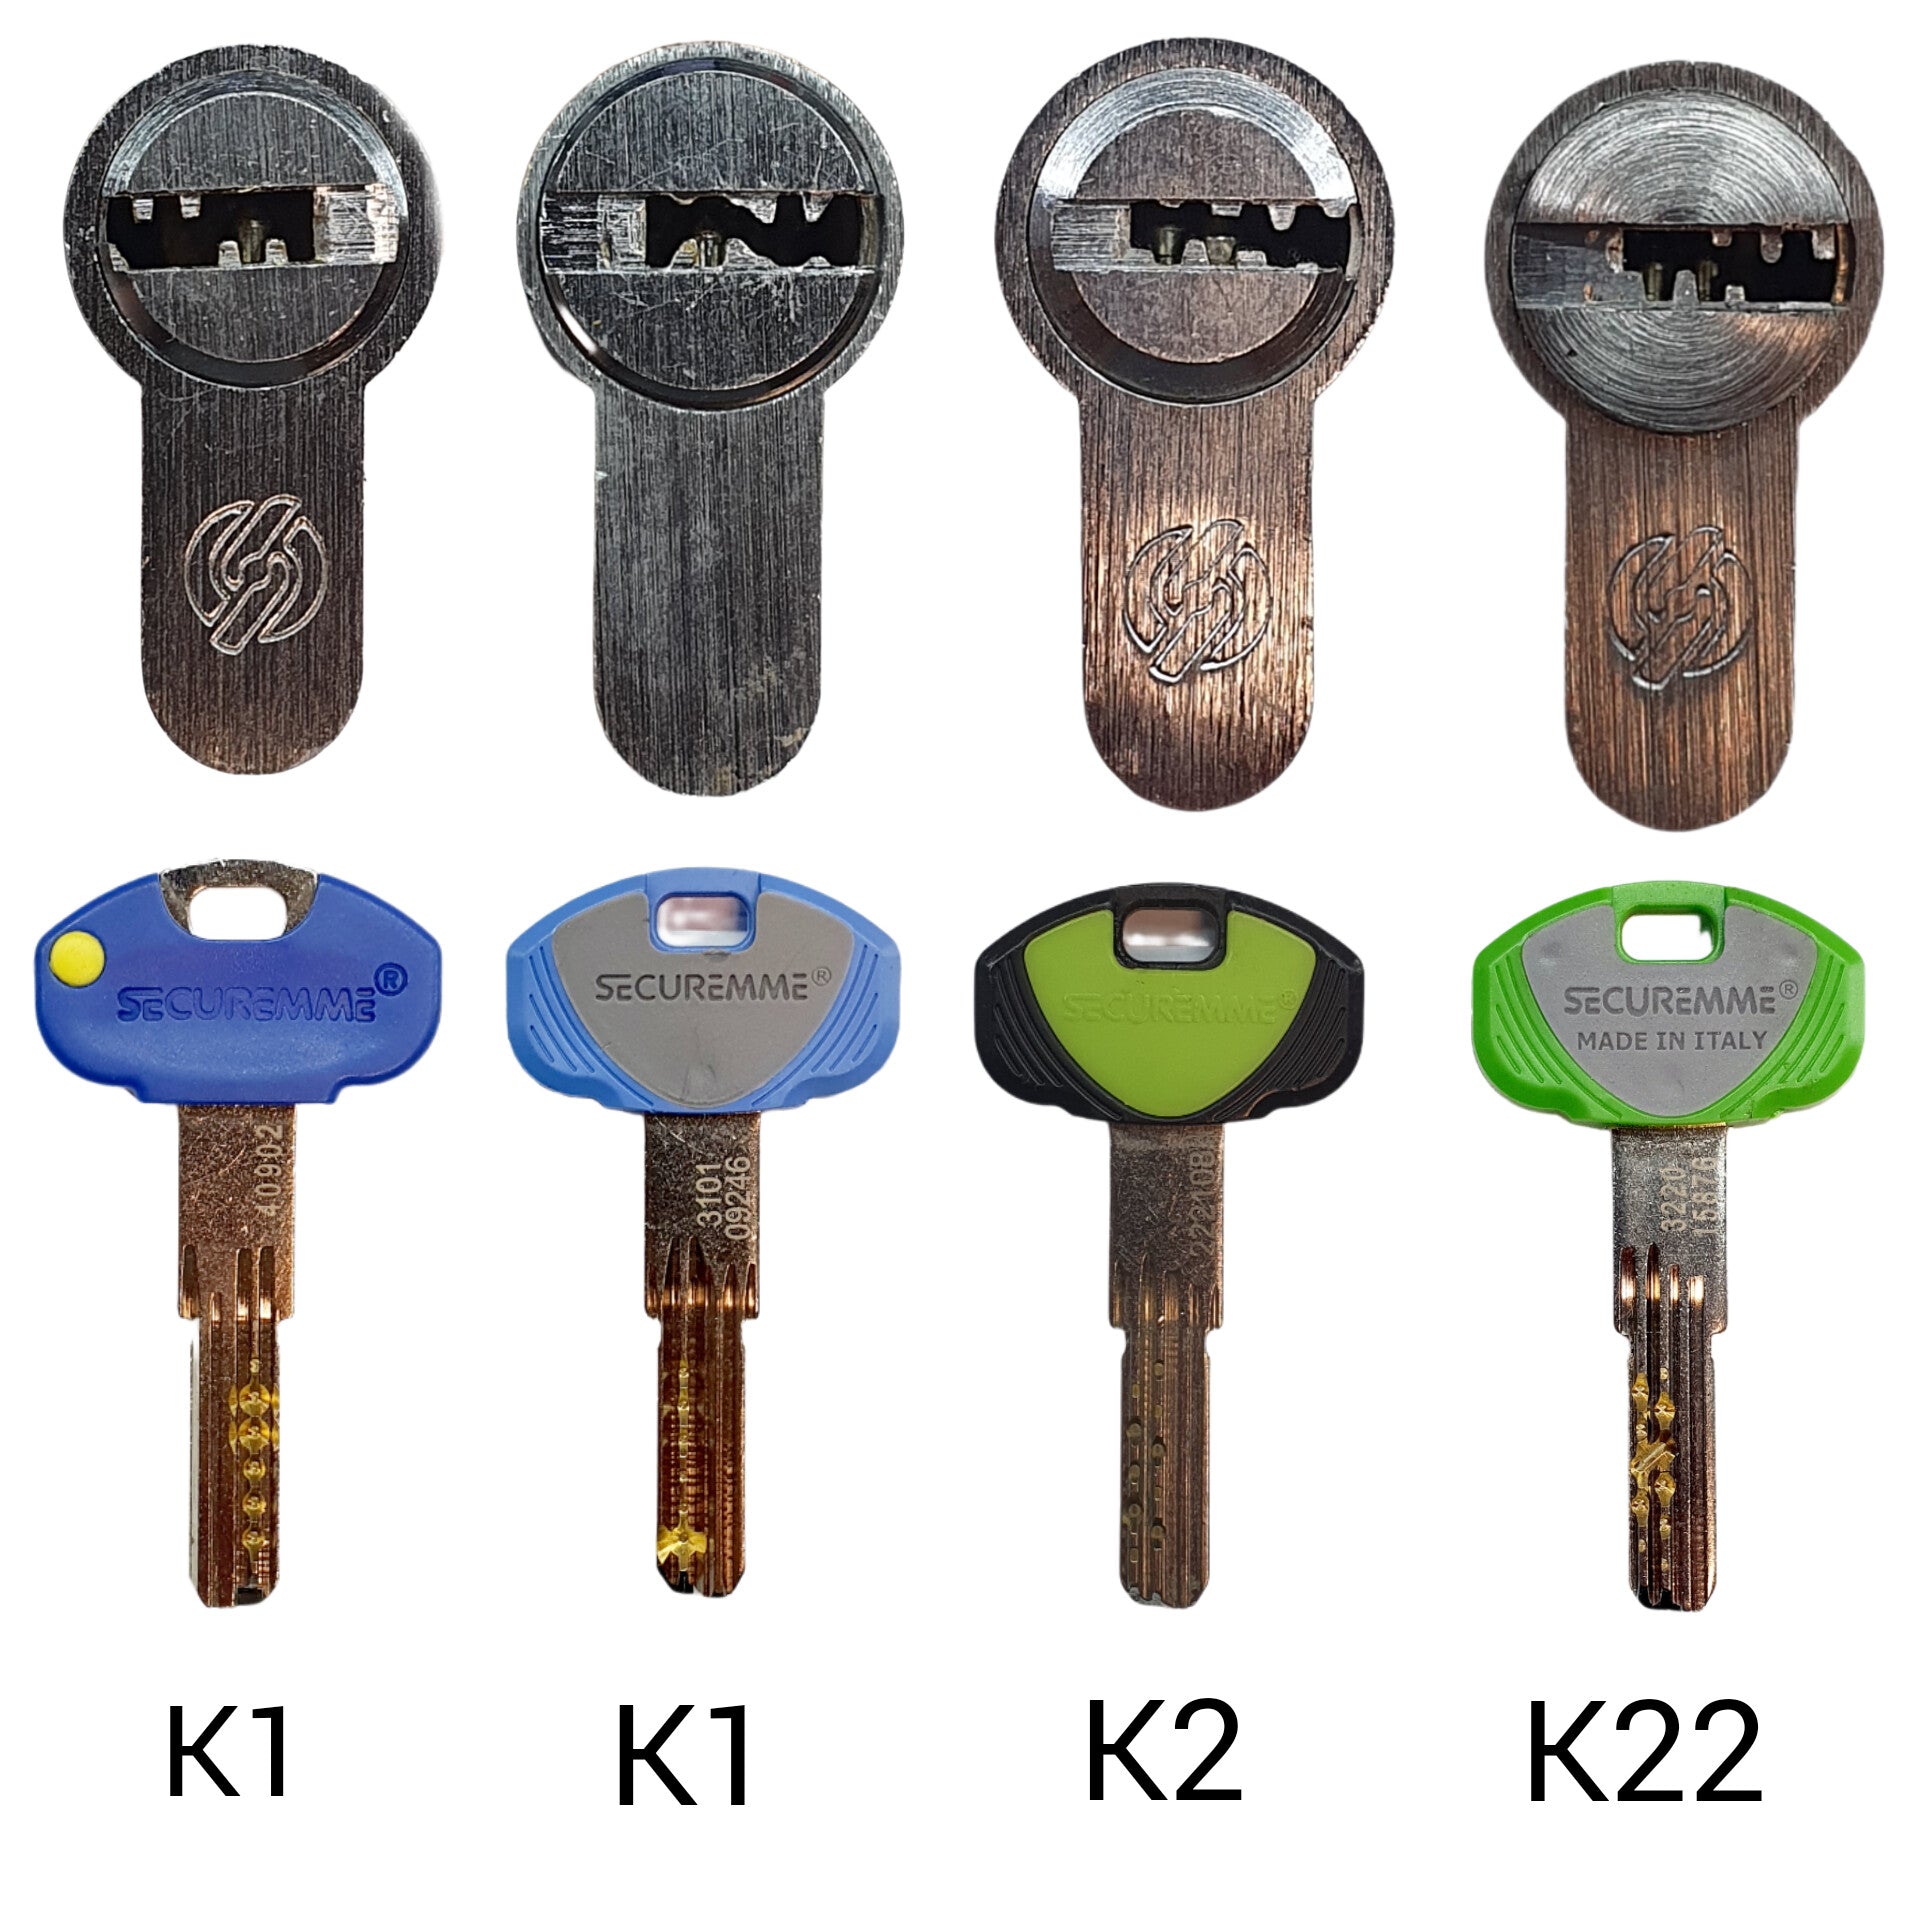 Securemme Keys Cut ONLINE with We Love Keys!